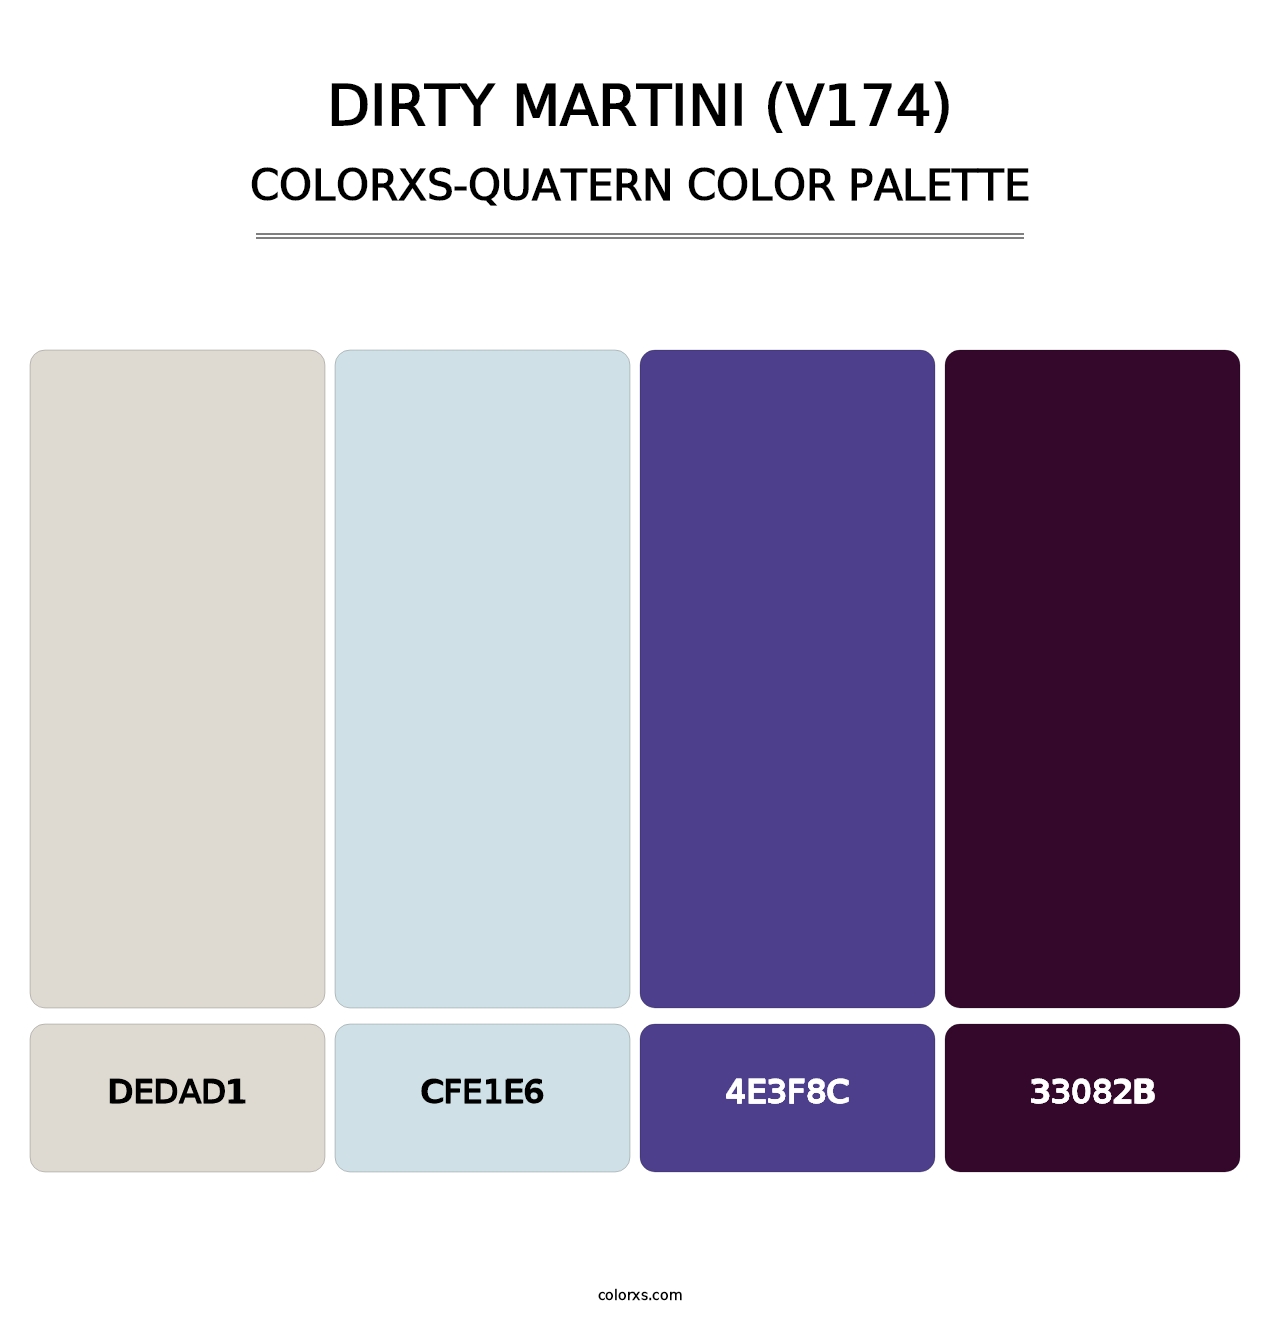 Dirty Martini (V174) - Colorxs Quatern Palette